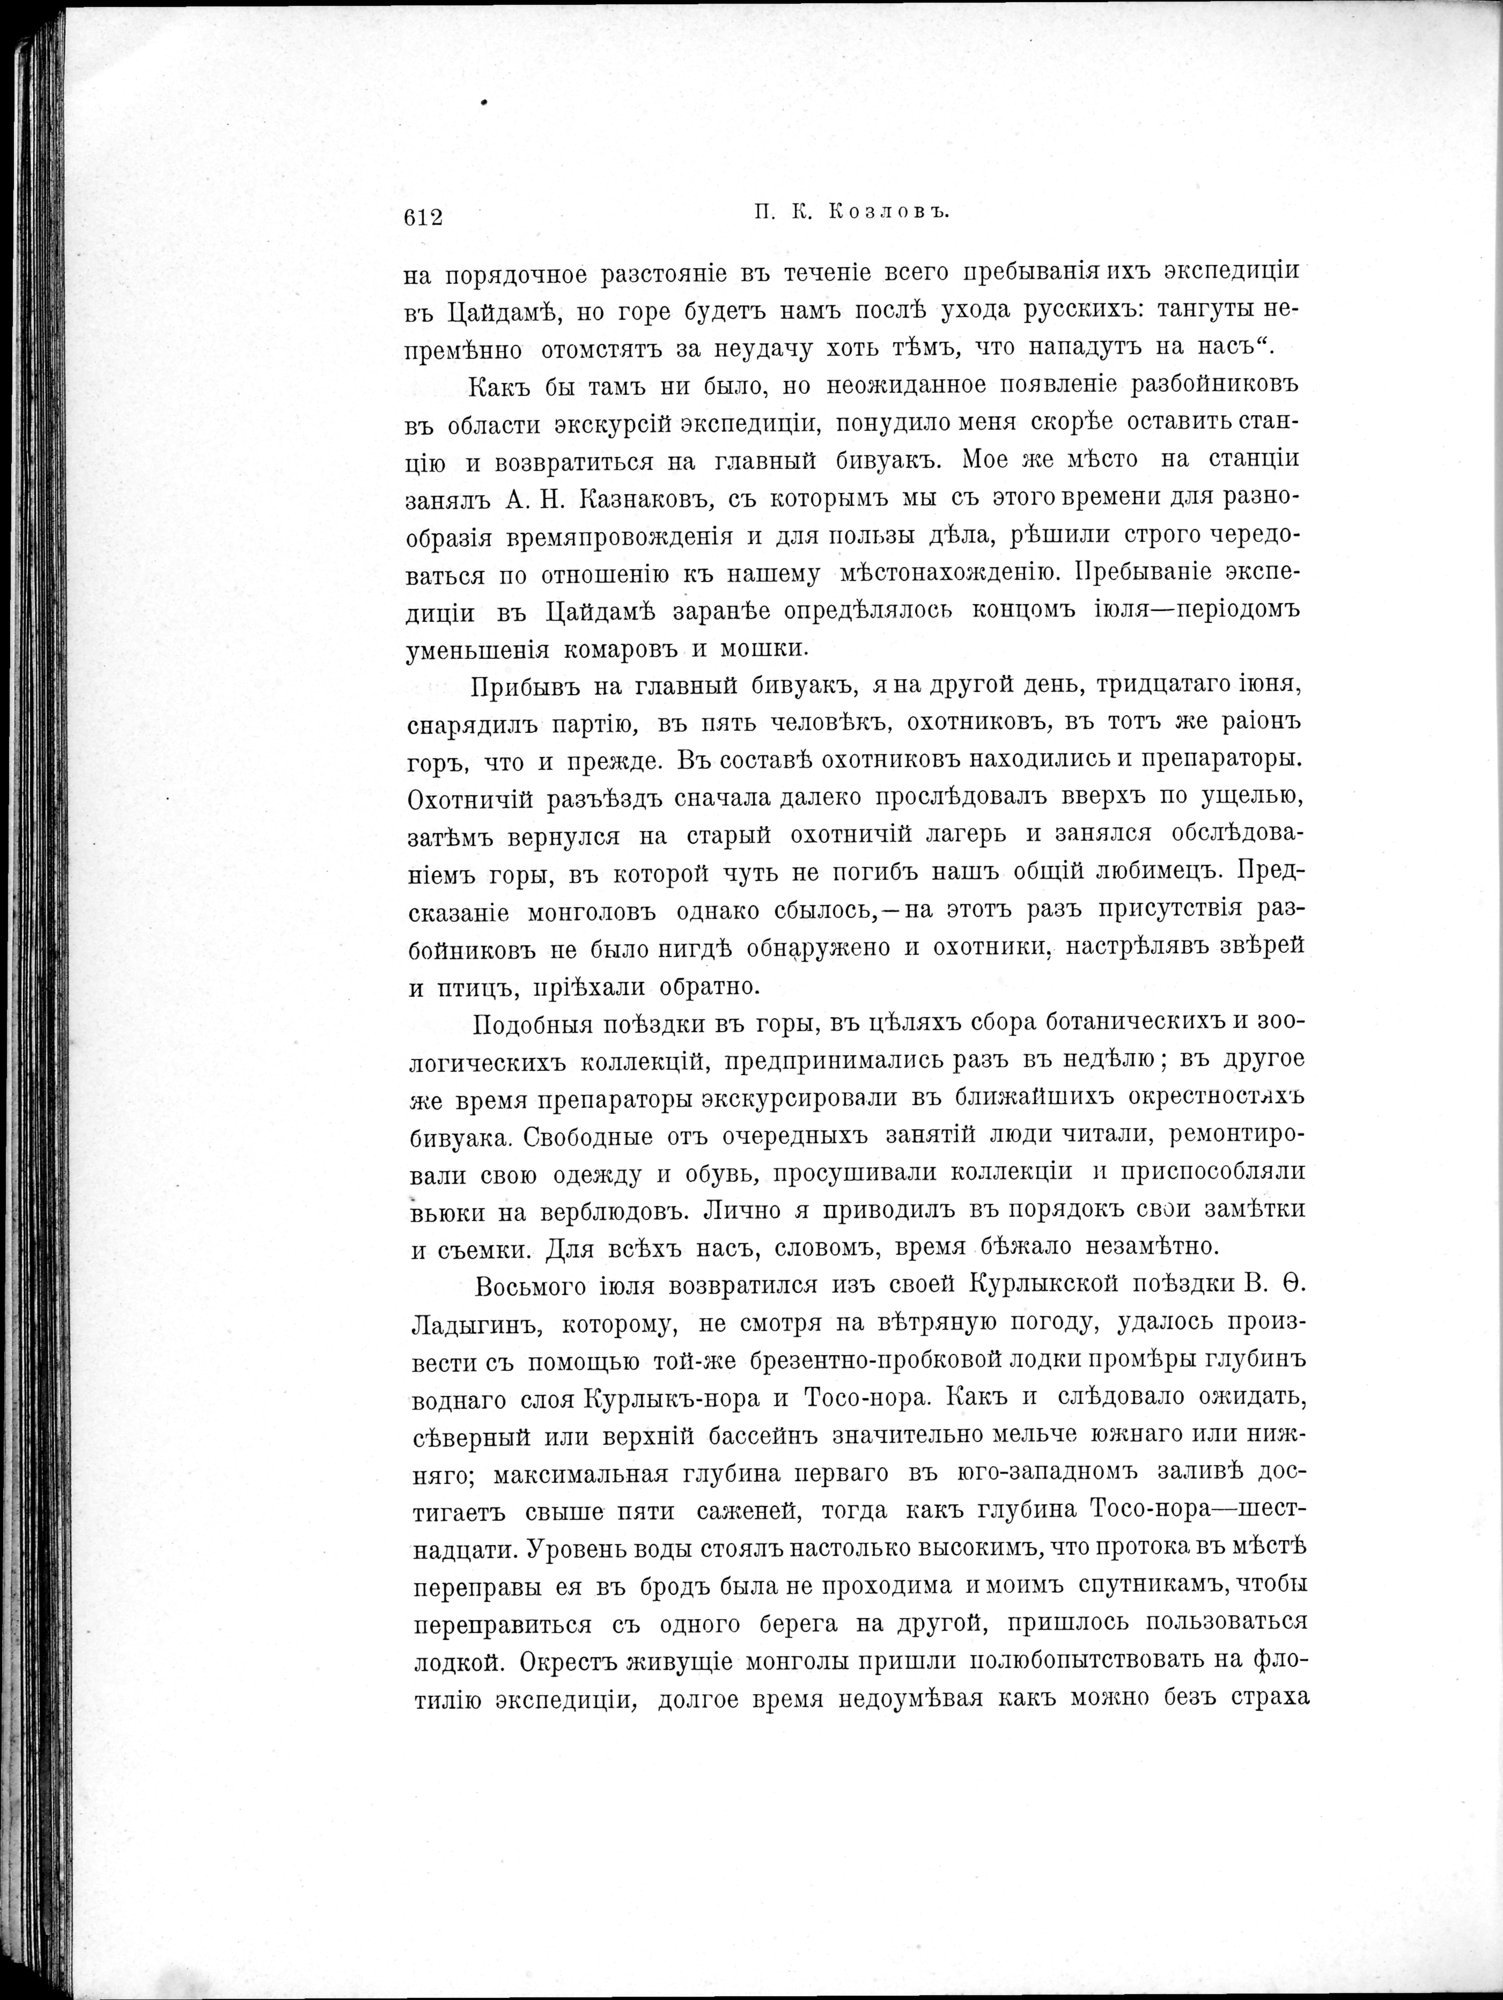 Mongoliia i Kam : vol.2 / Page 440 (Grayscale High Resolution Image)